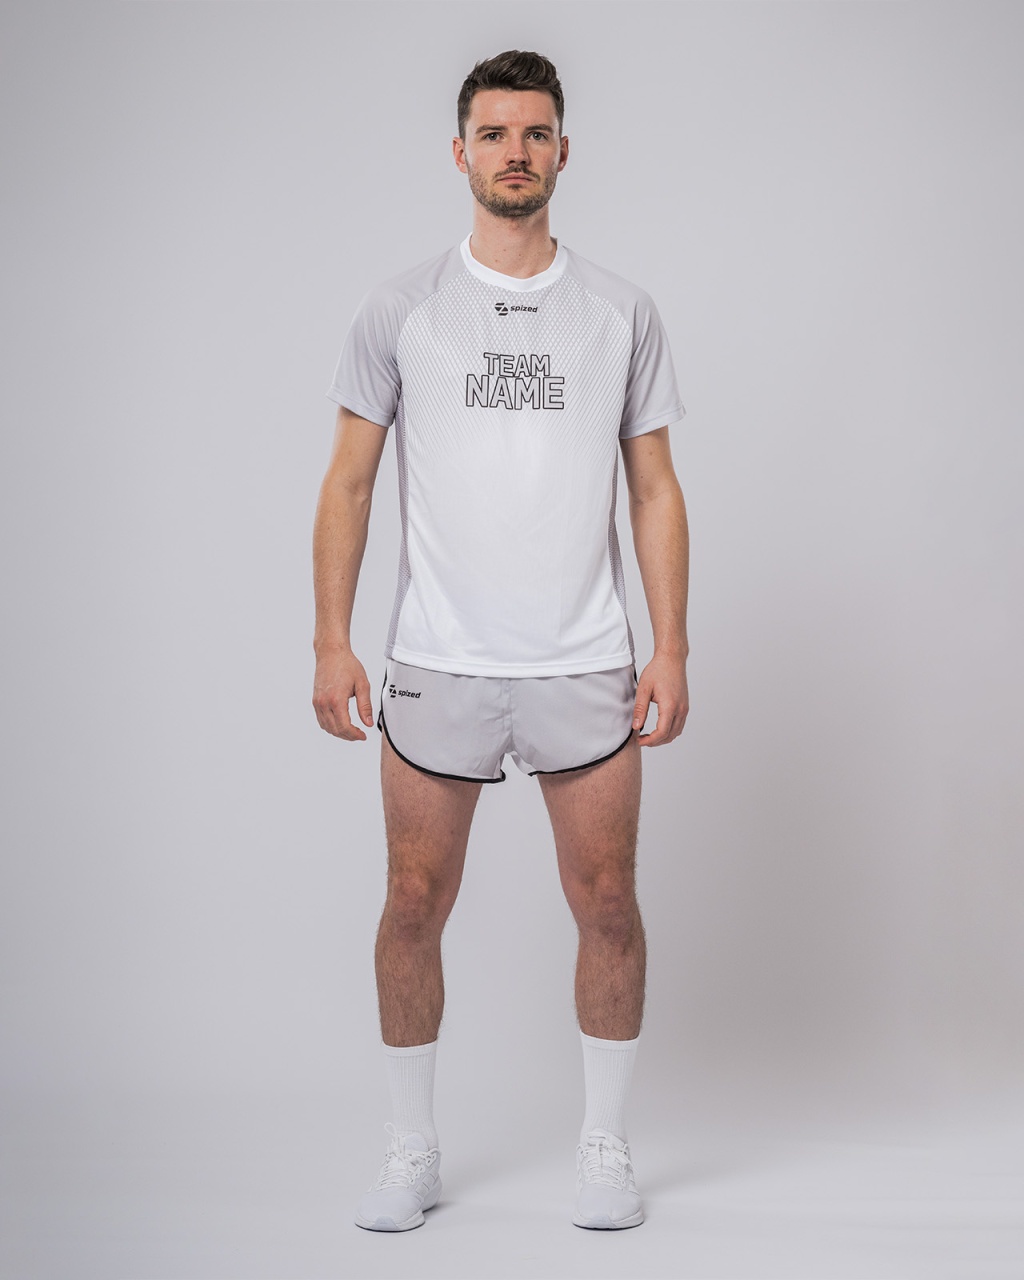 Compete men’s running shorts